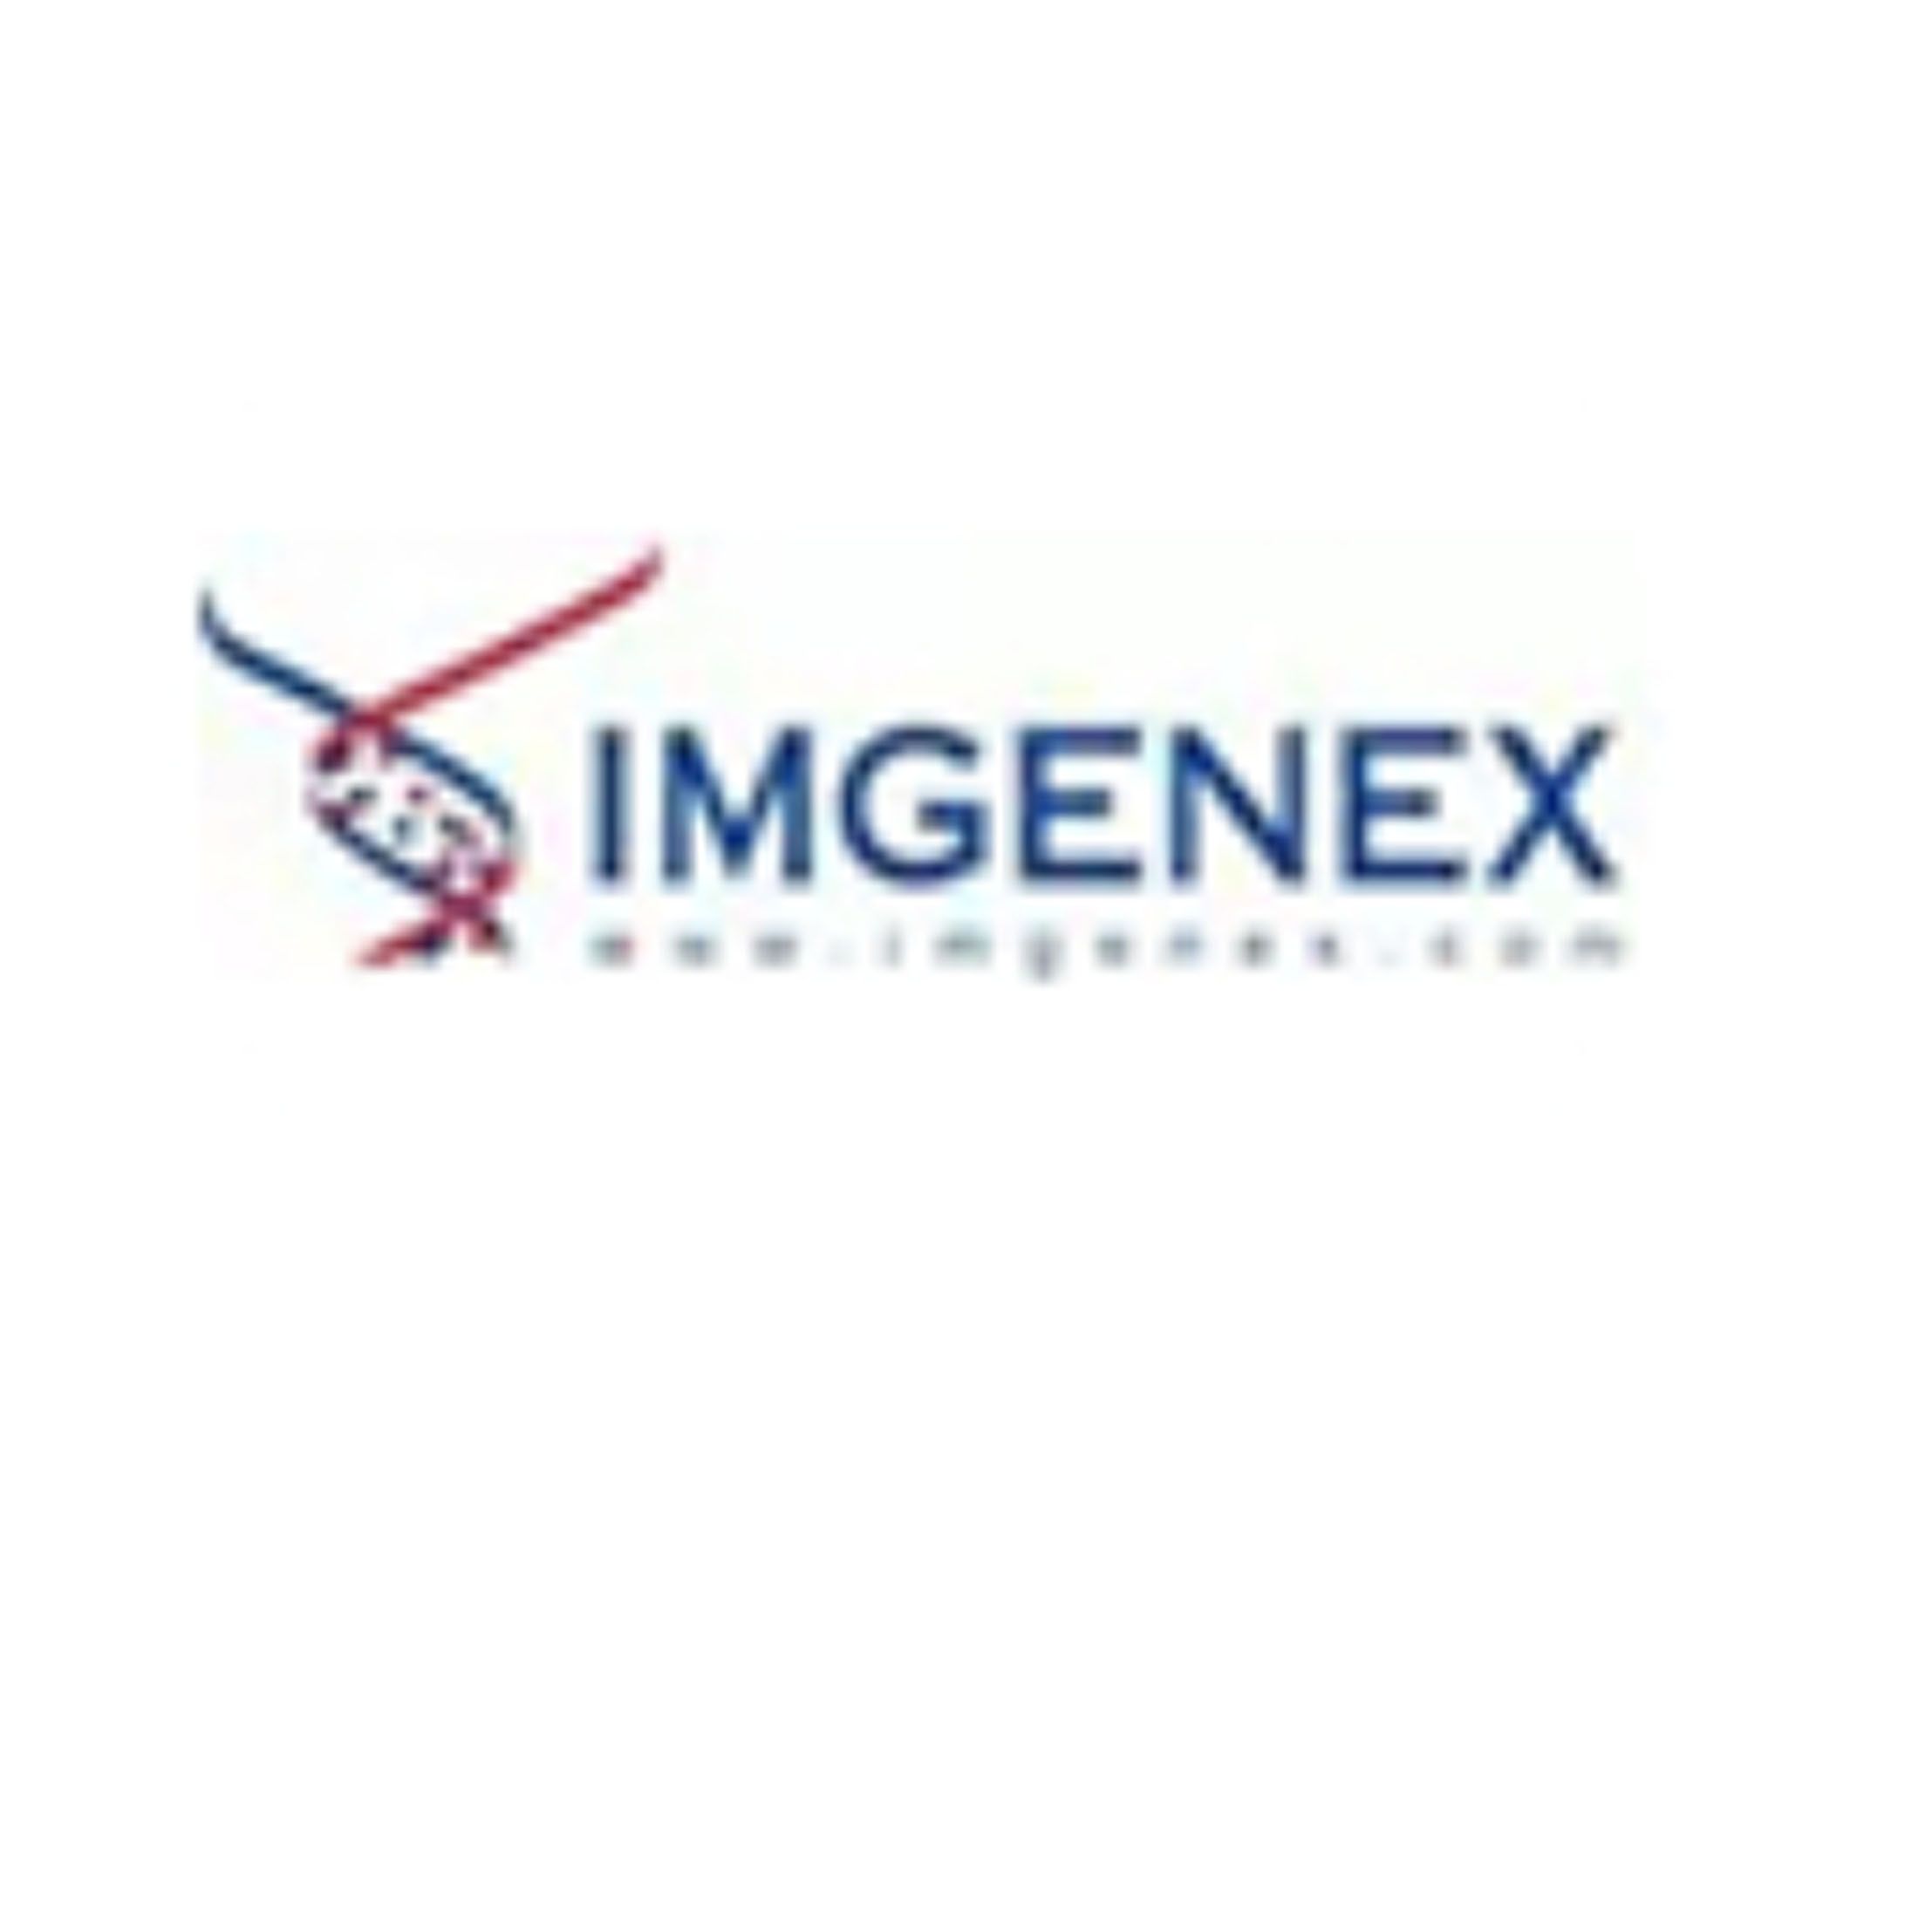 Imgenex抗体、ELISA检测试剂盒、蛋白转染试剂、细胞凋亡、ChIP